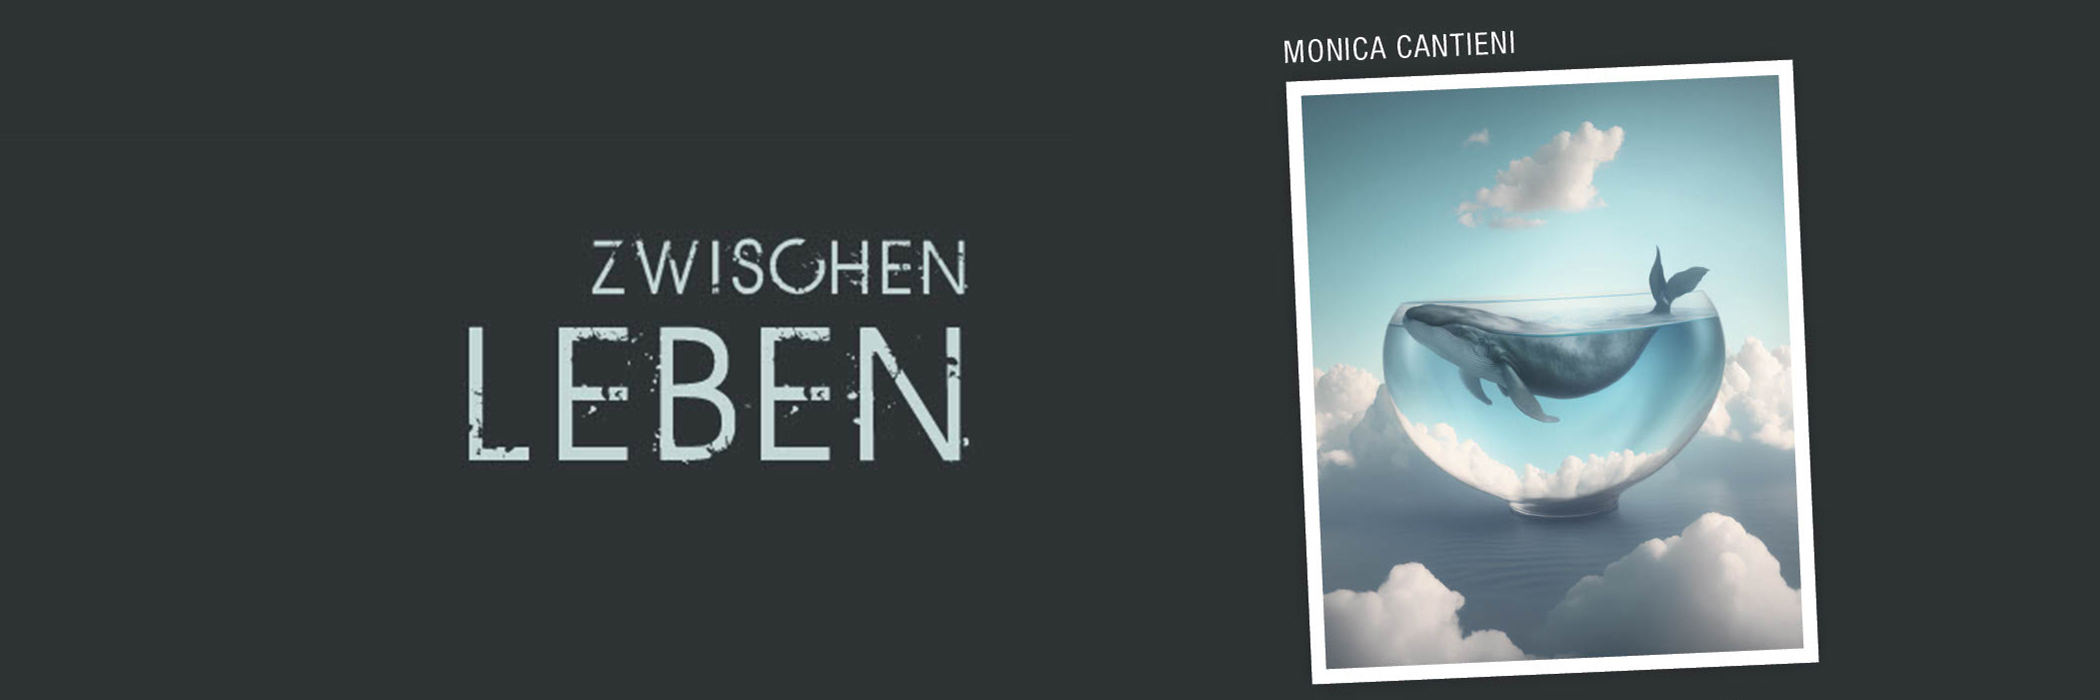 Buchcover Zwischen den Leben (Monica Cantiemi)